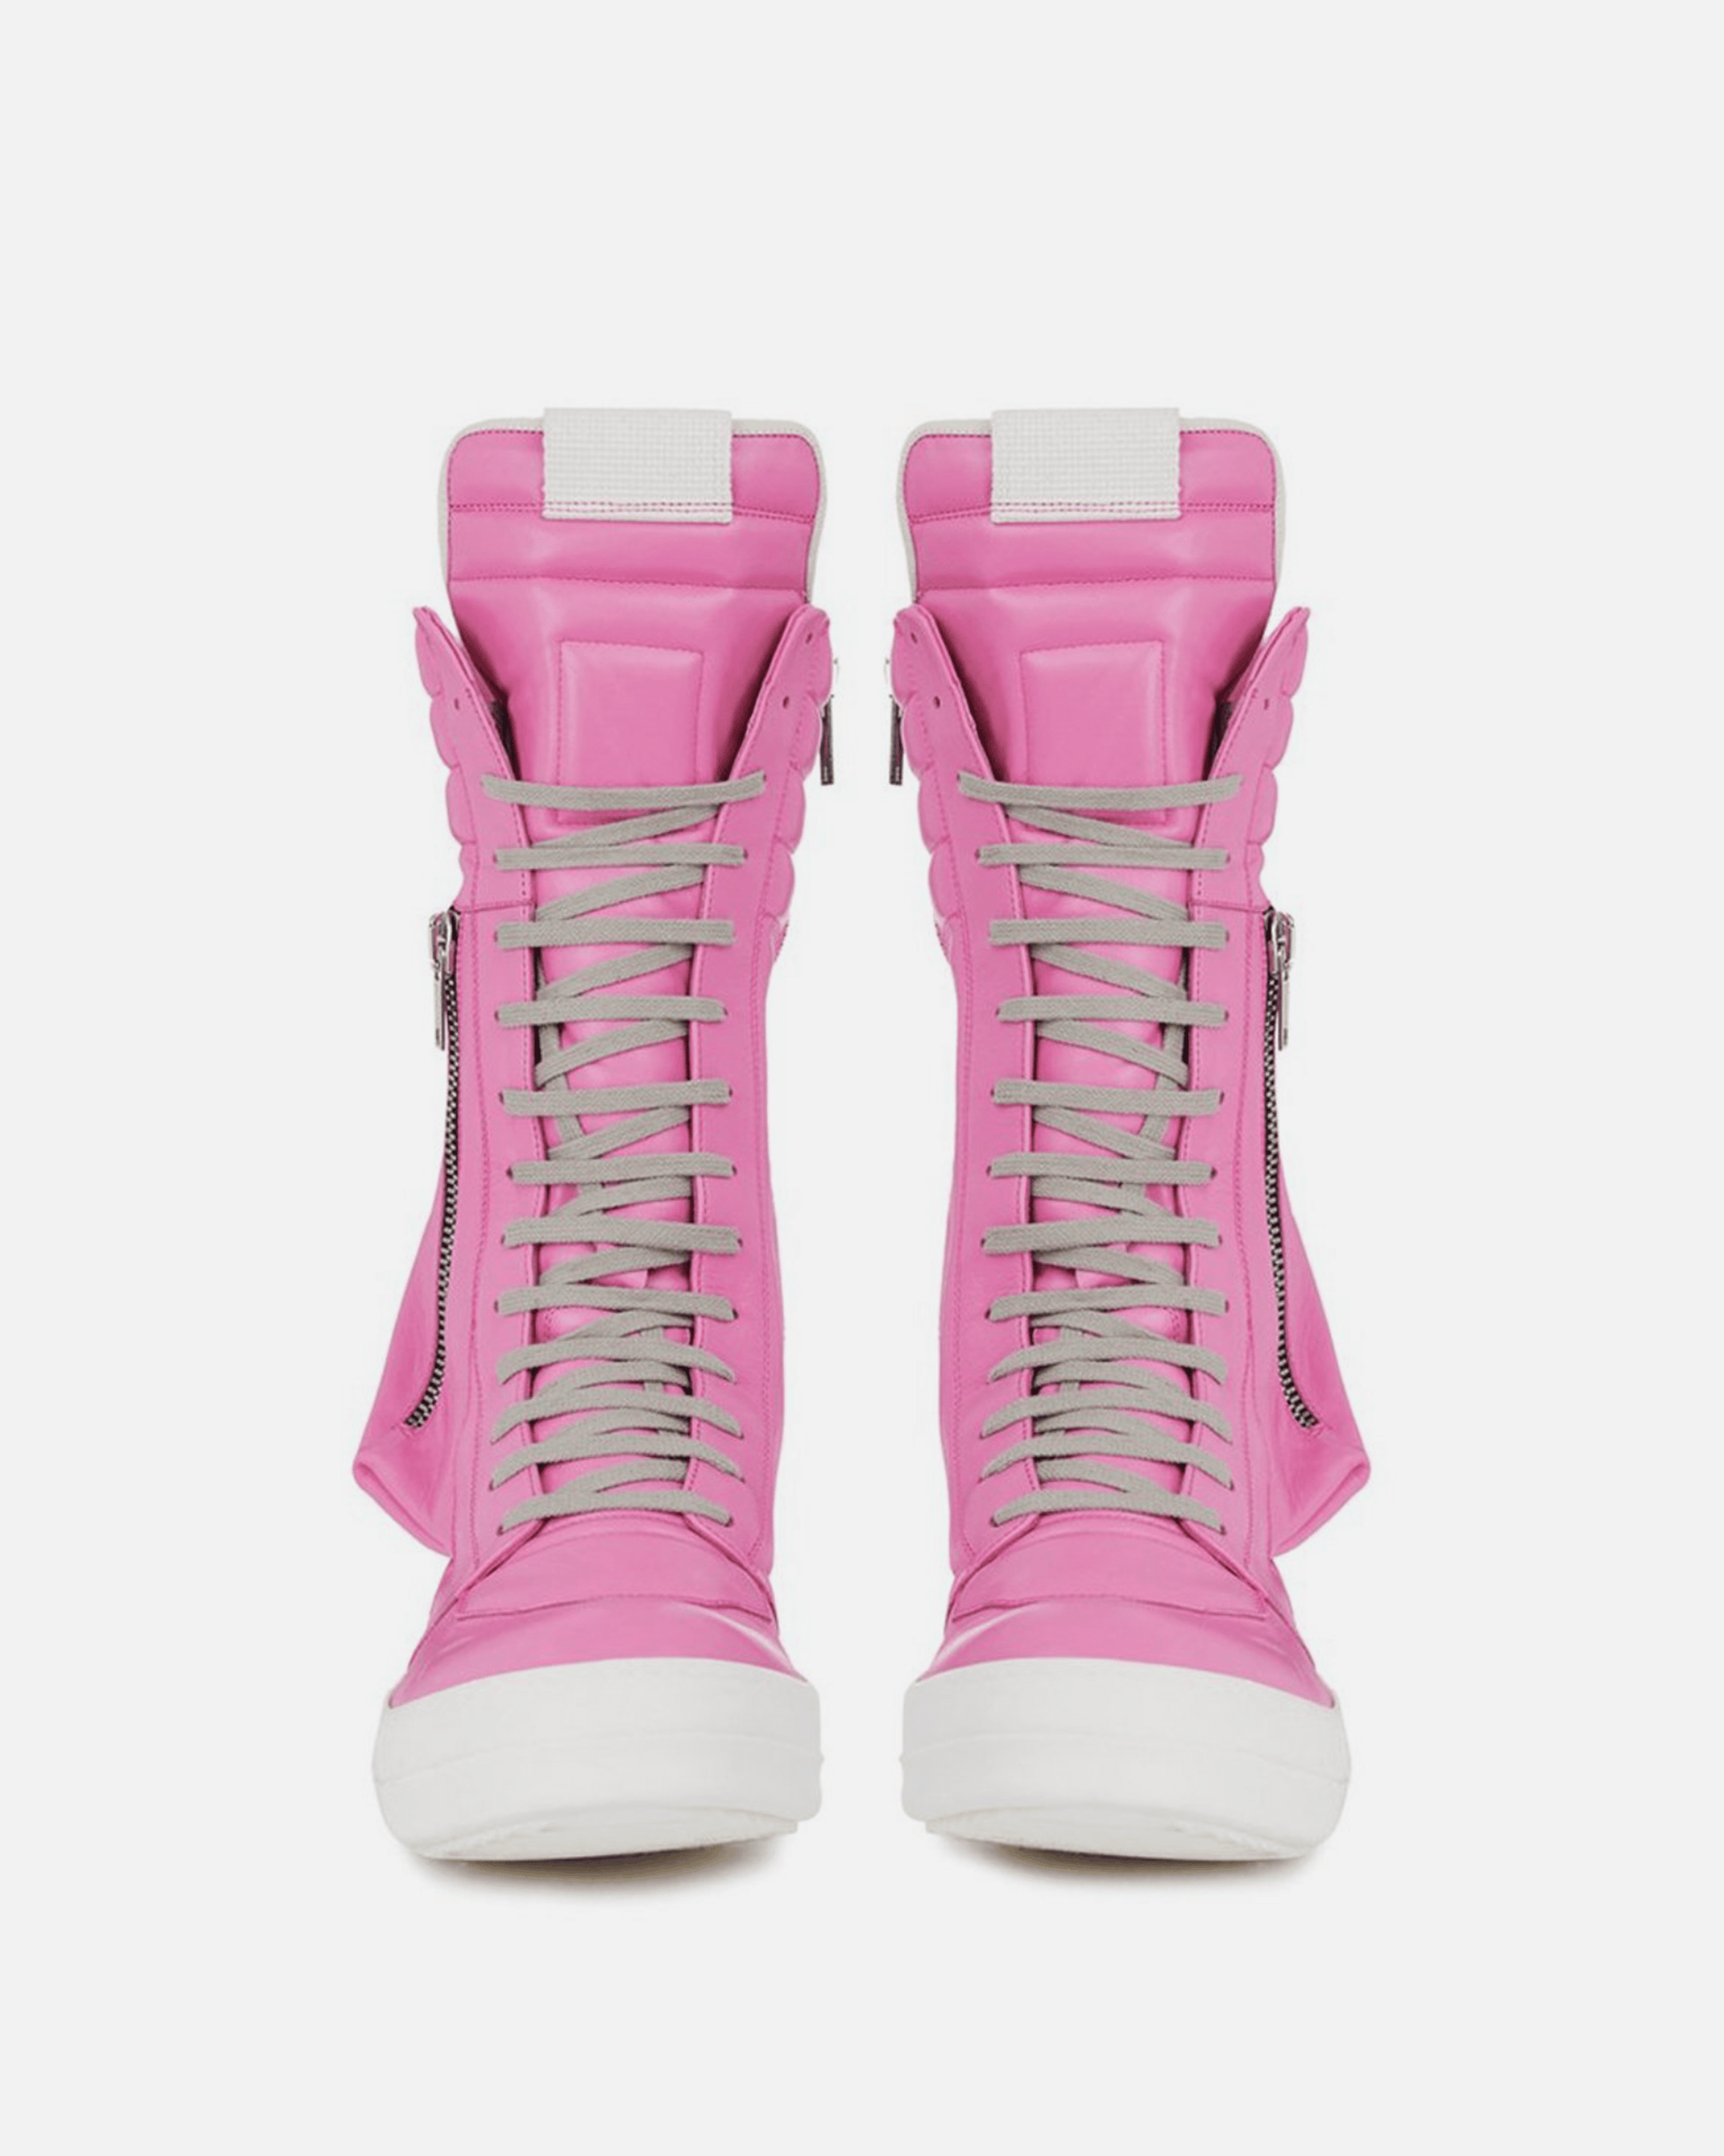 Rick Owens Men's Shoes Cargobasket in Pop Pink